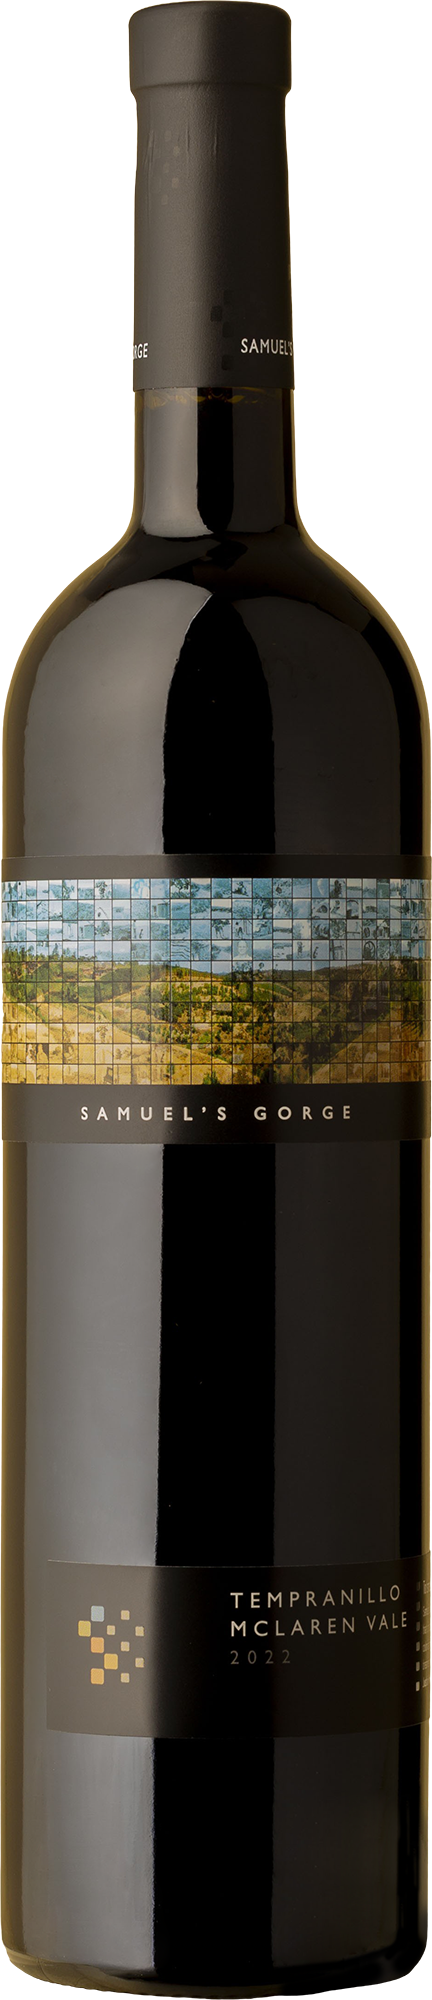 Samuel's Gorge - Tempranillo 2022 Red Wine